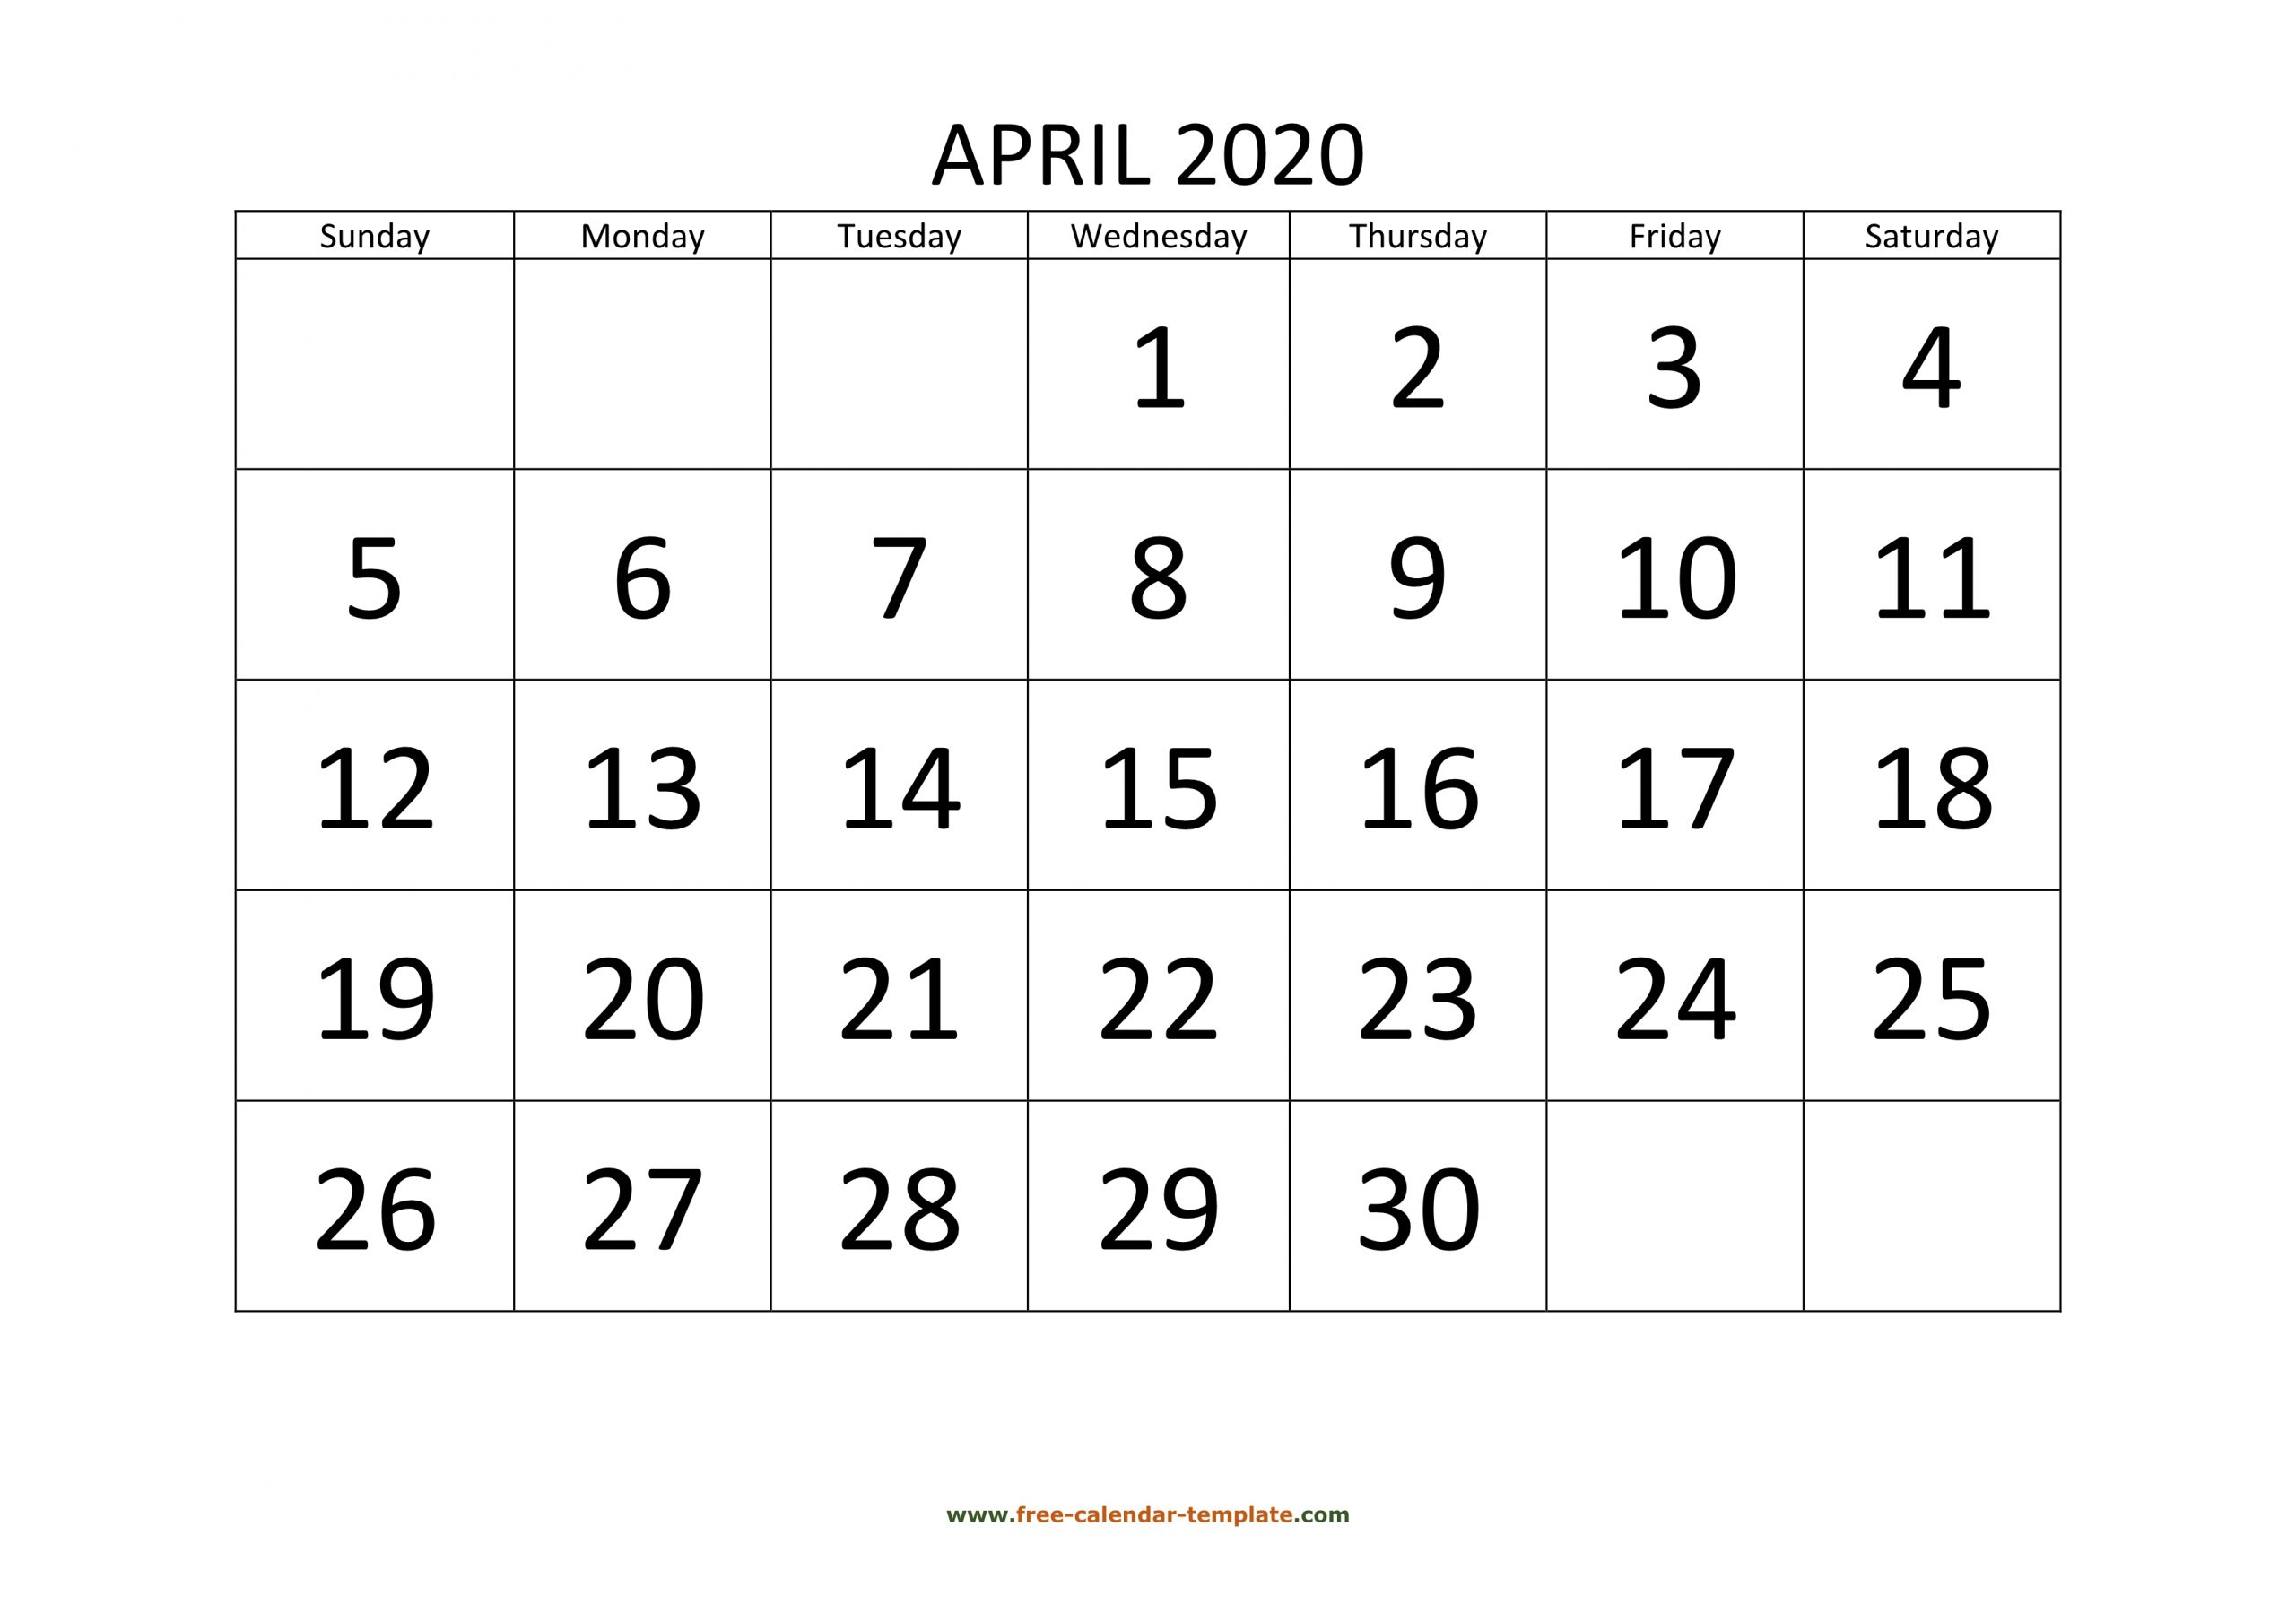 April 2020 Calendar Designed With Large Font (Horizontal